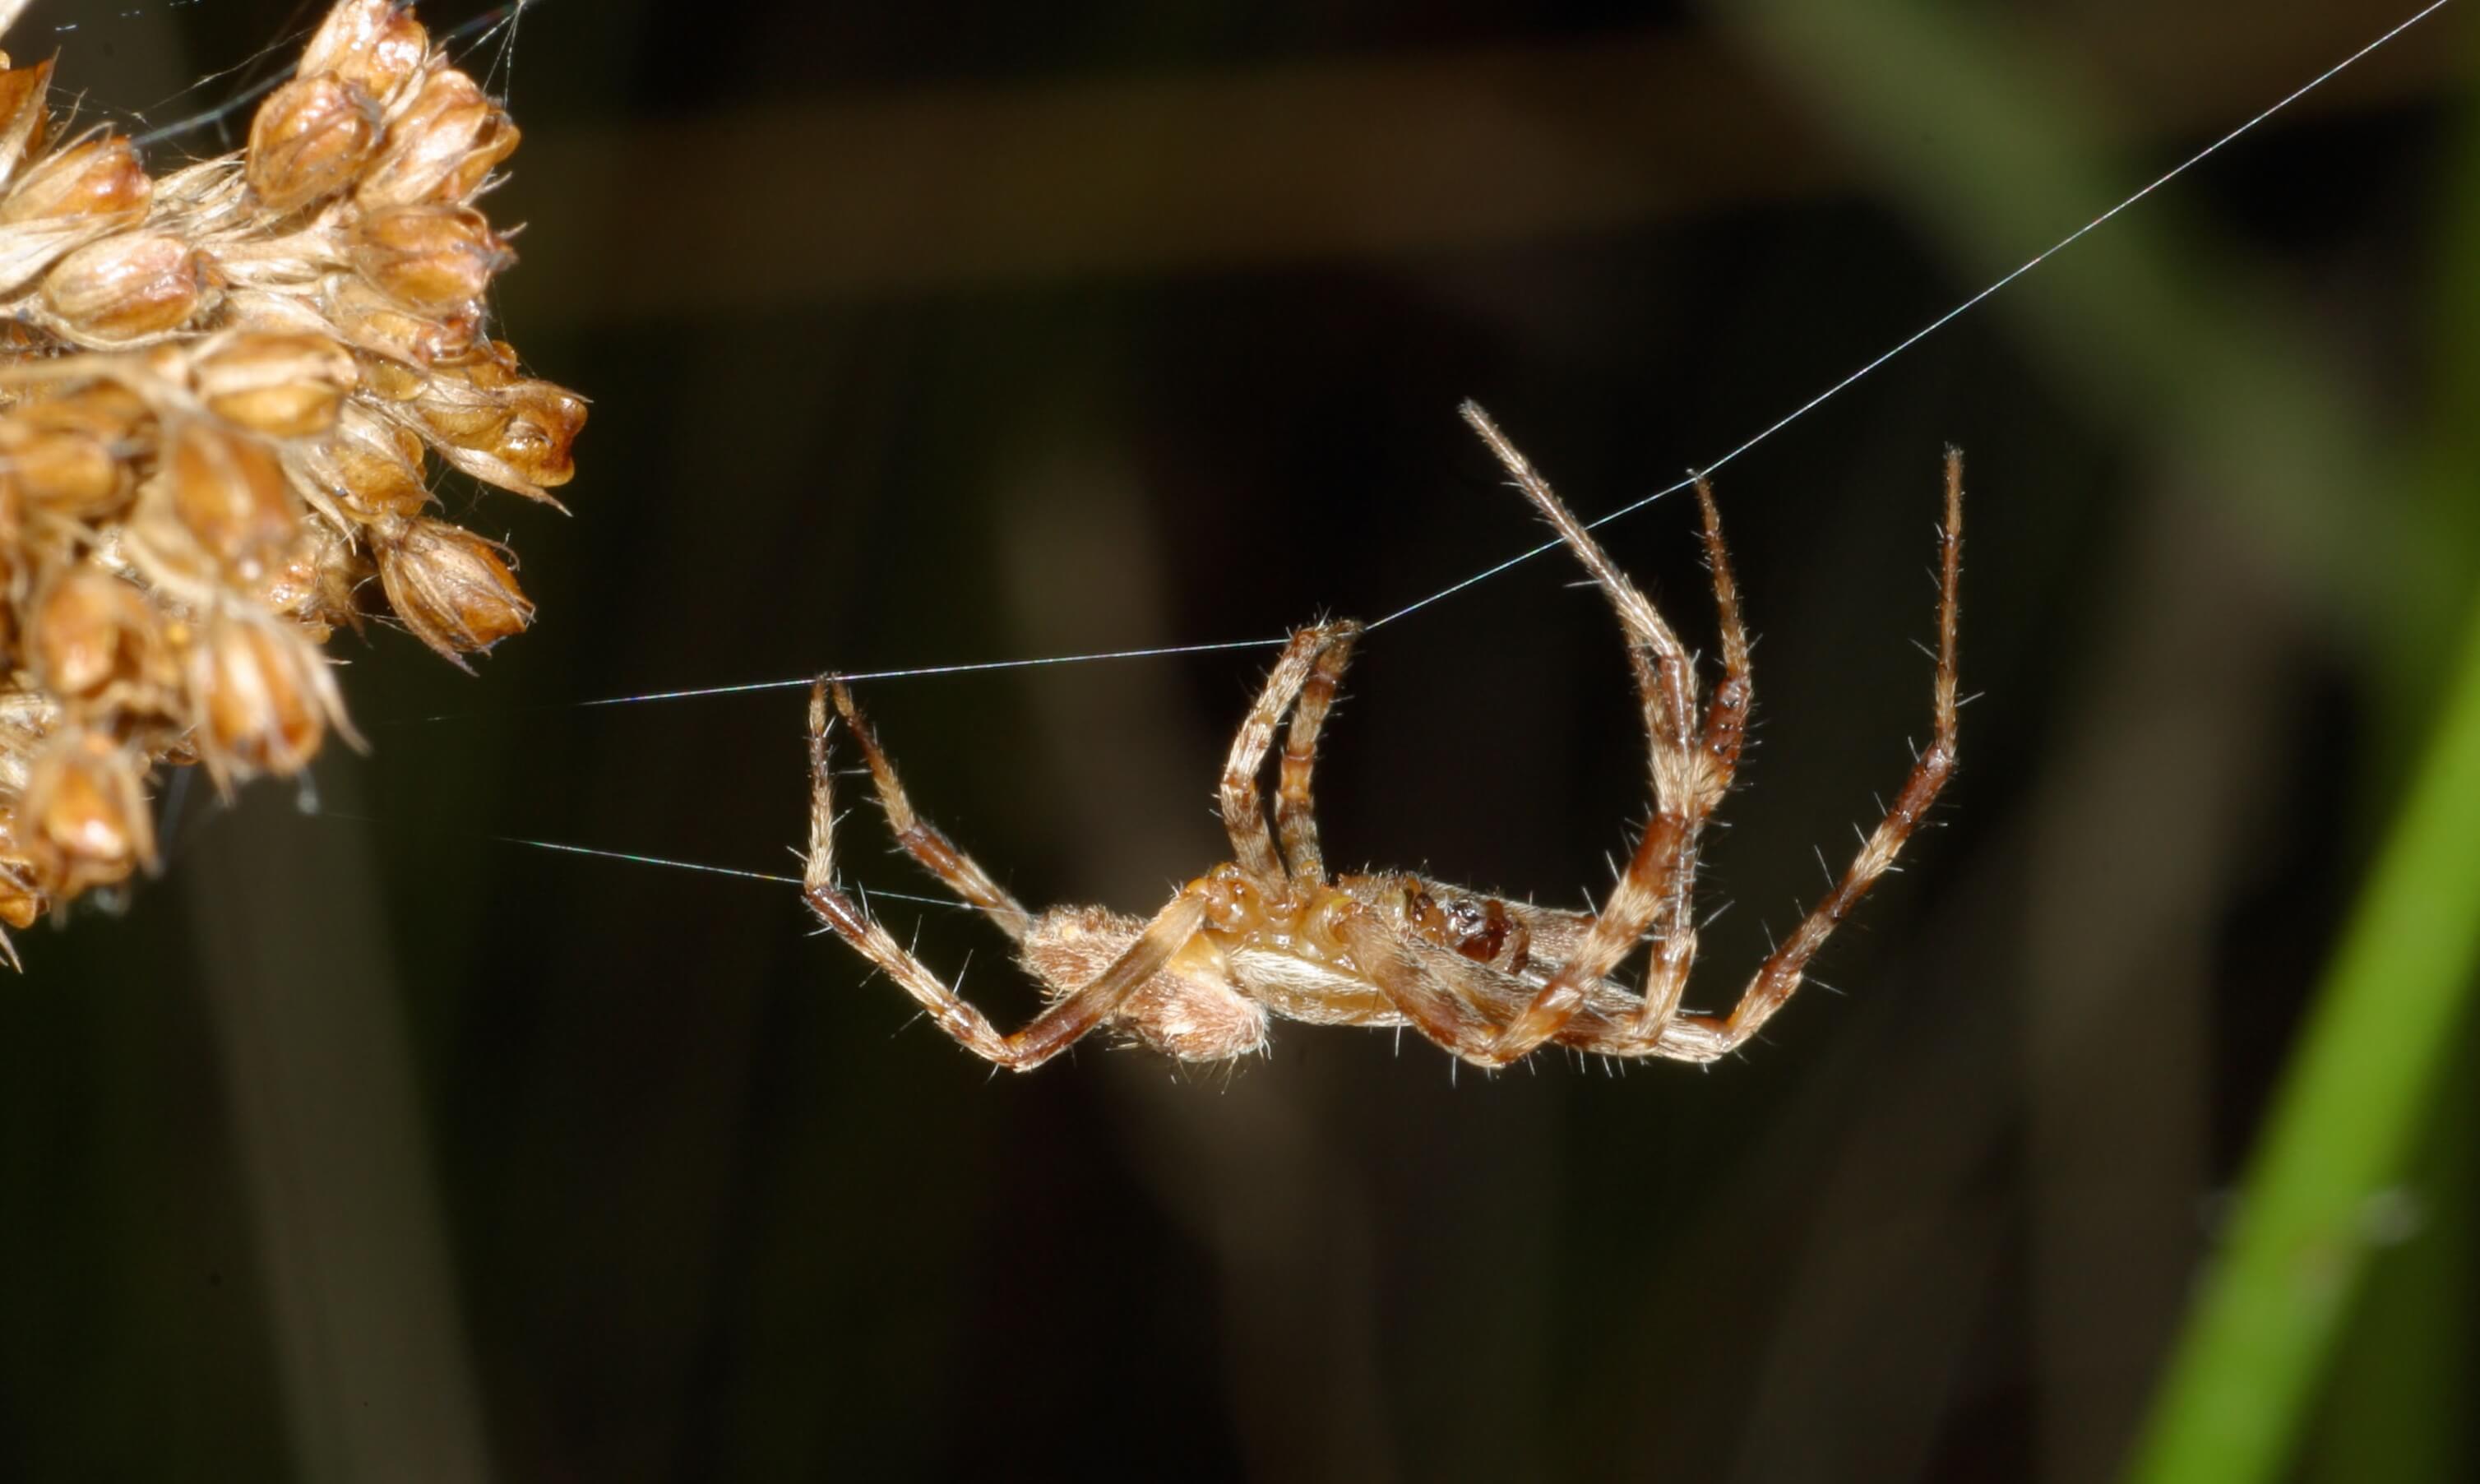 Spider climbing on its web